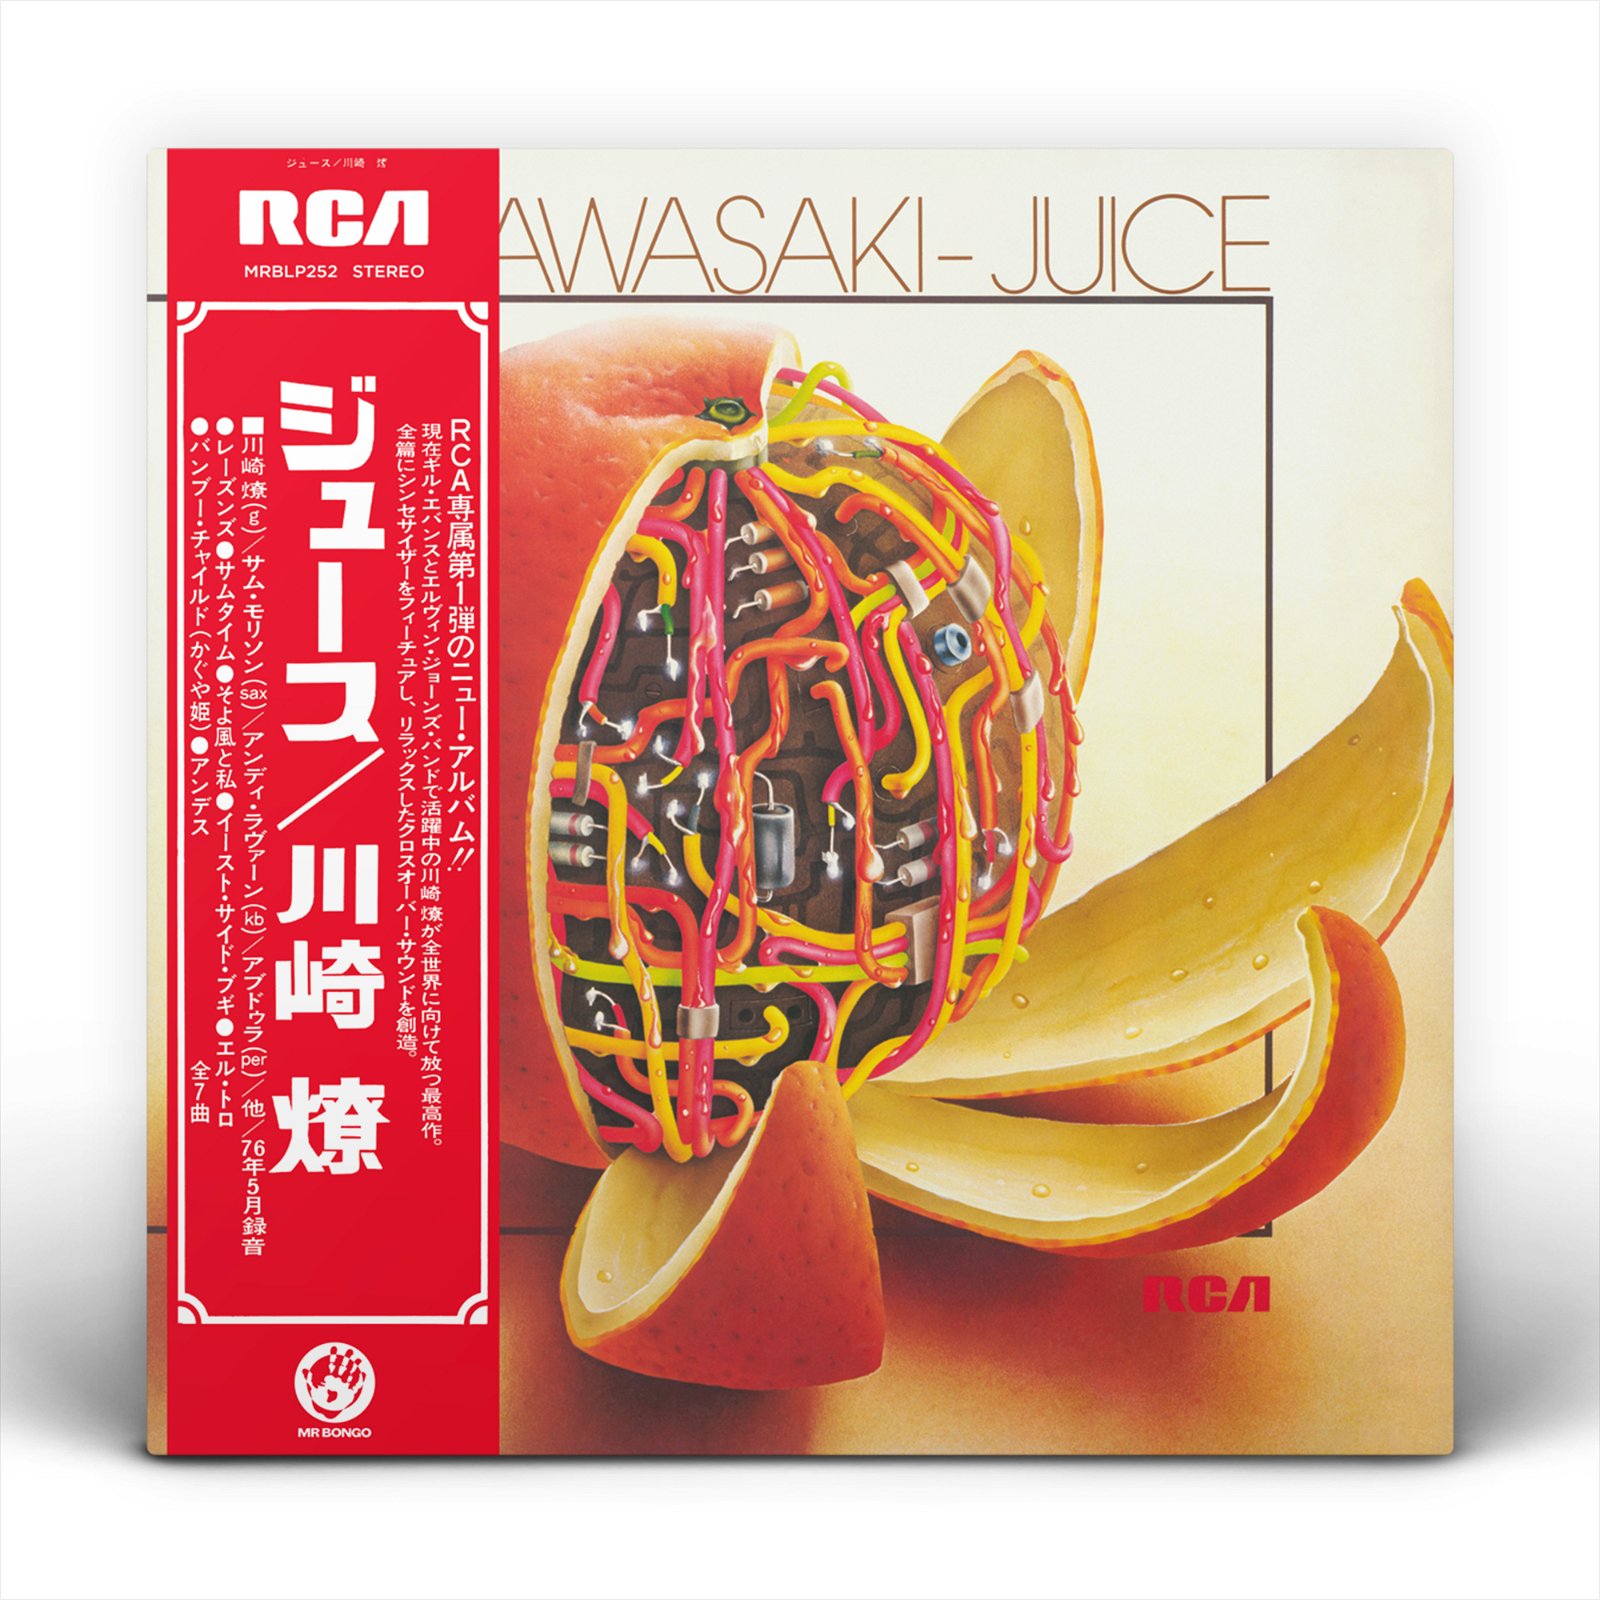 KAWASAKI, RYO - JUICE, Vinyl